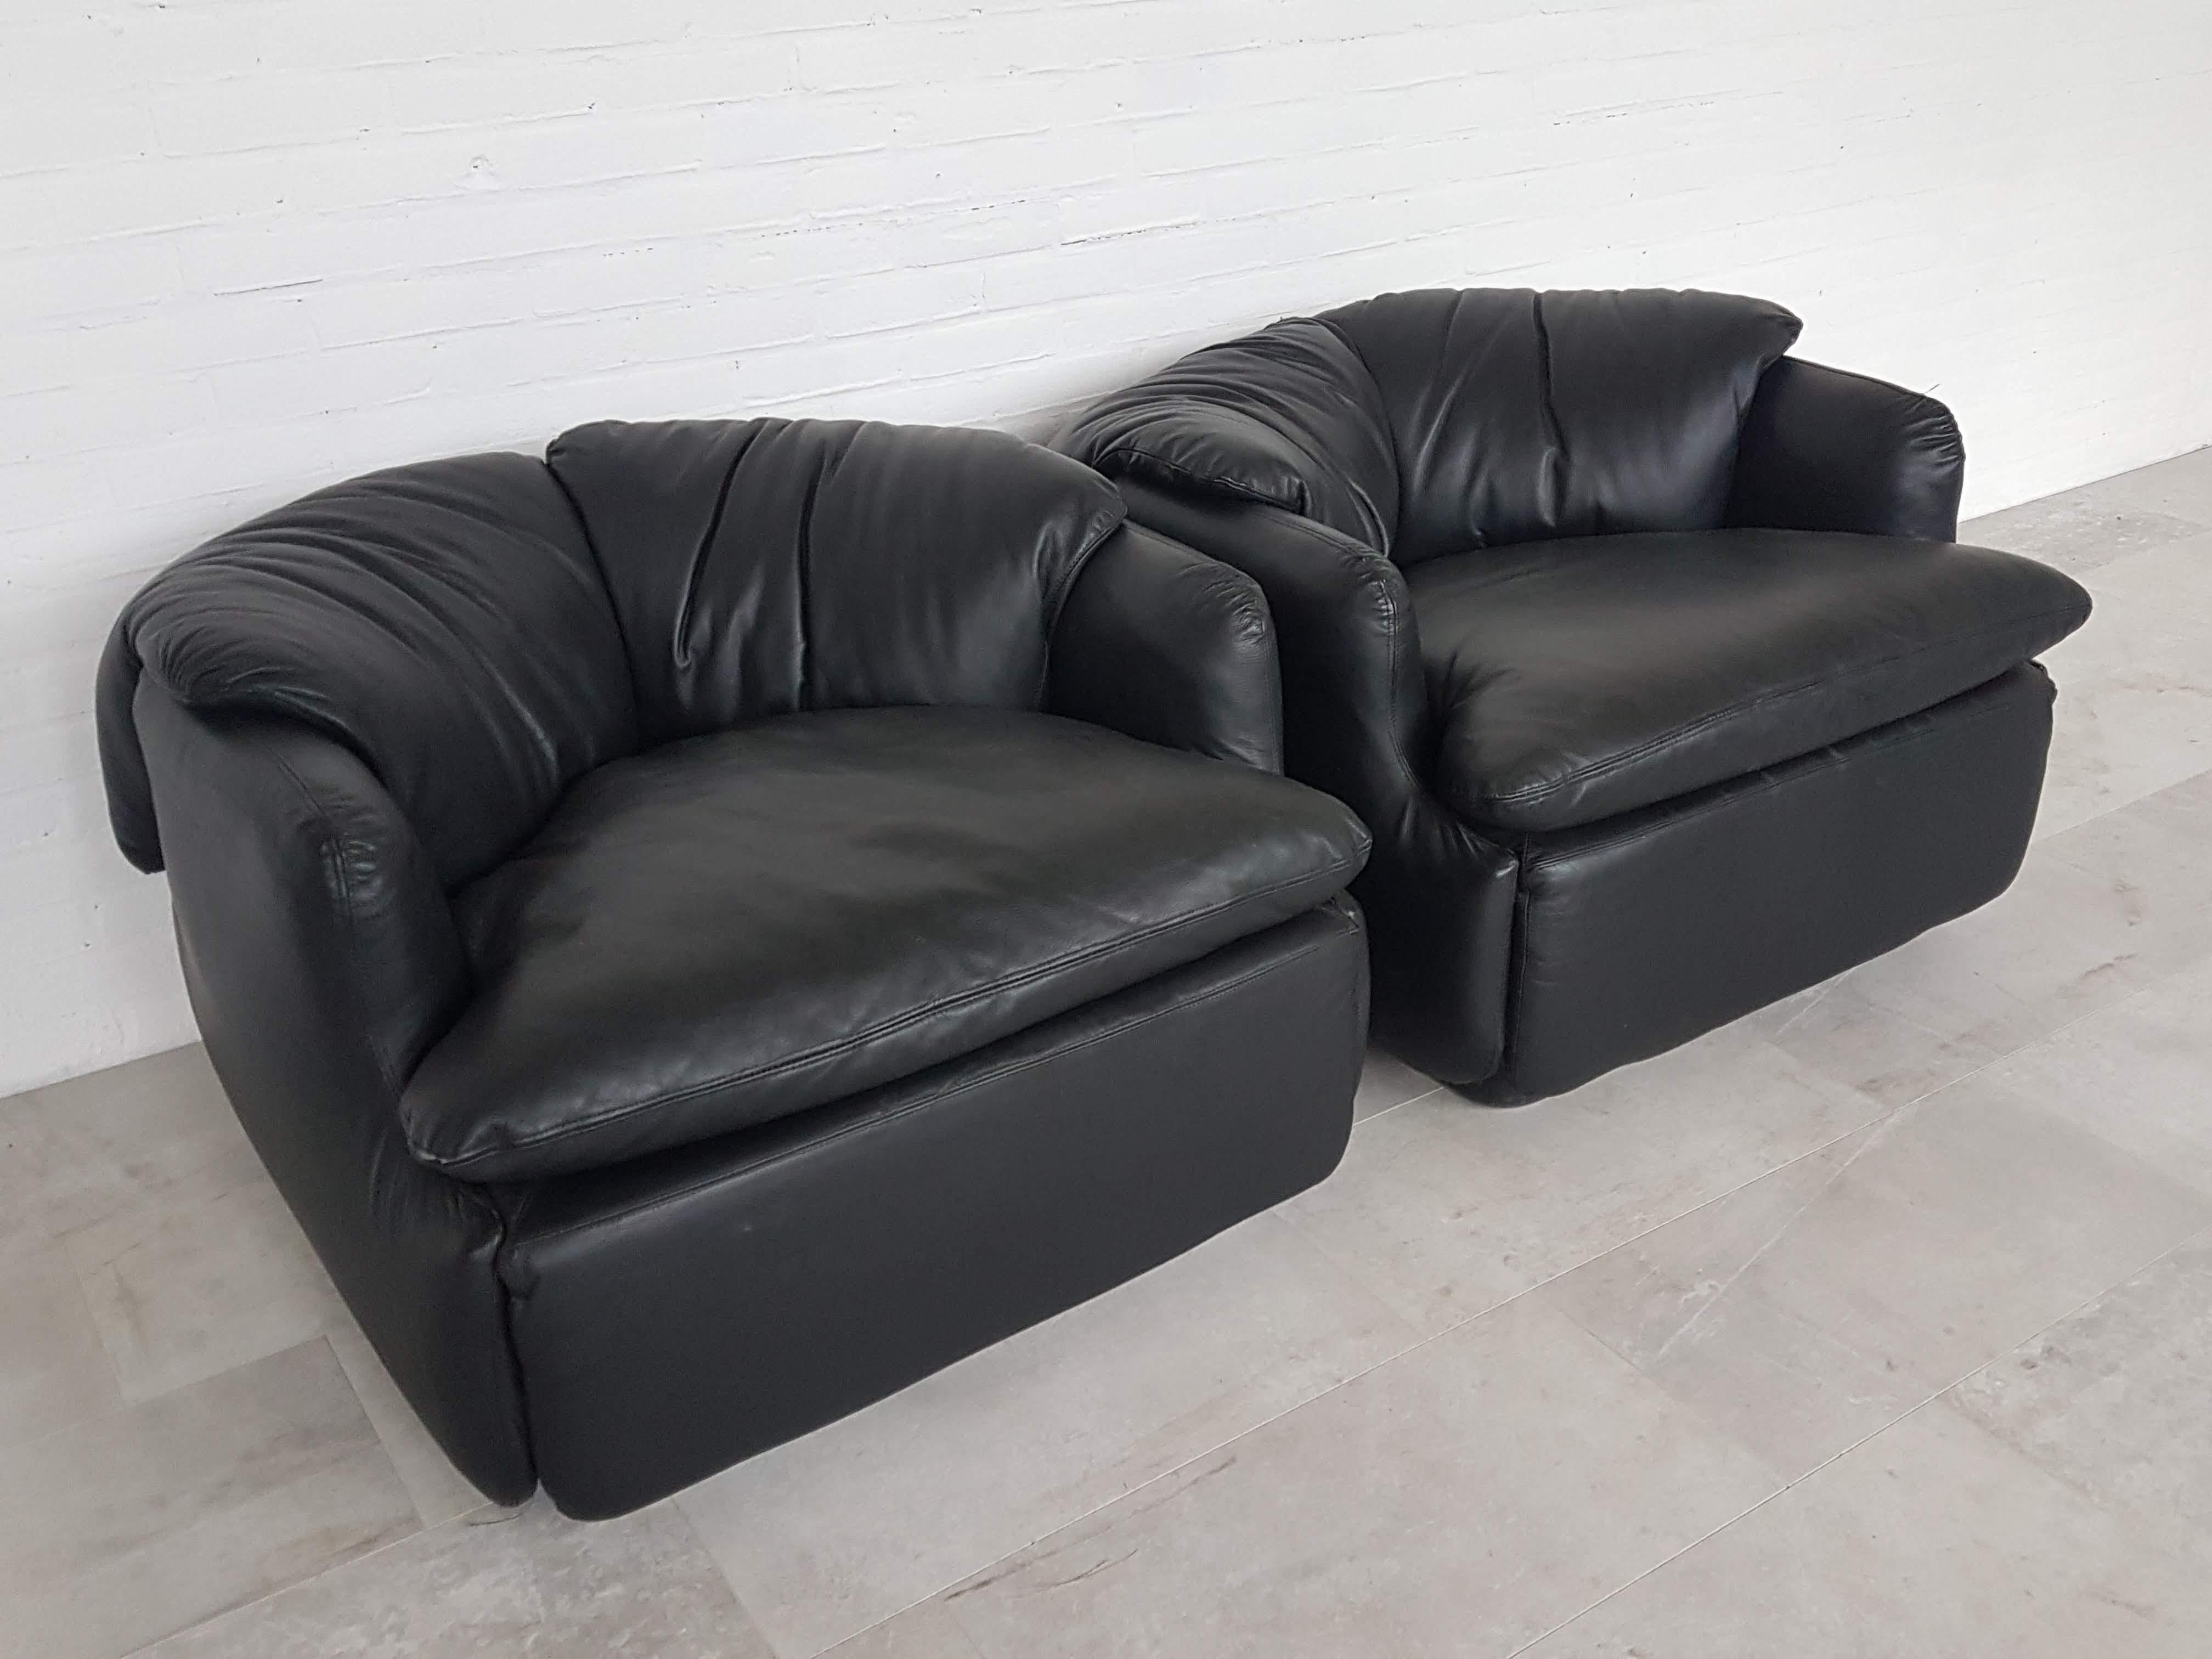 20th Century Saporiti Black Leather 'Confidential' Club Chairs by Alberto Rosselli